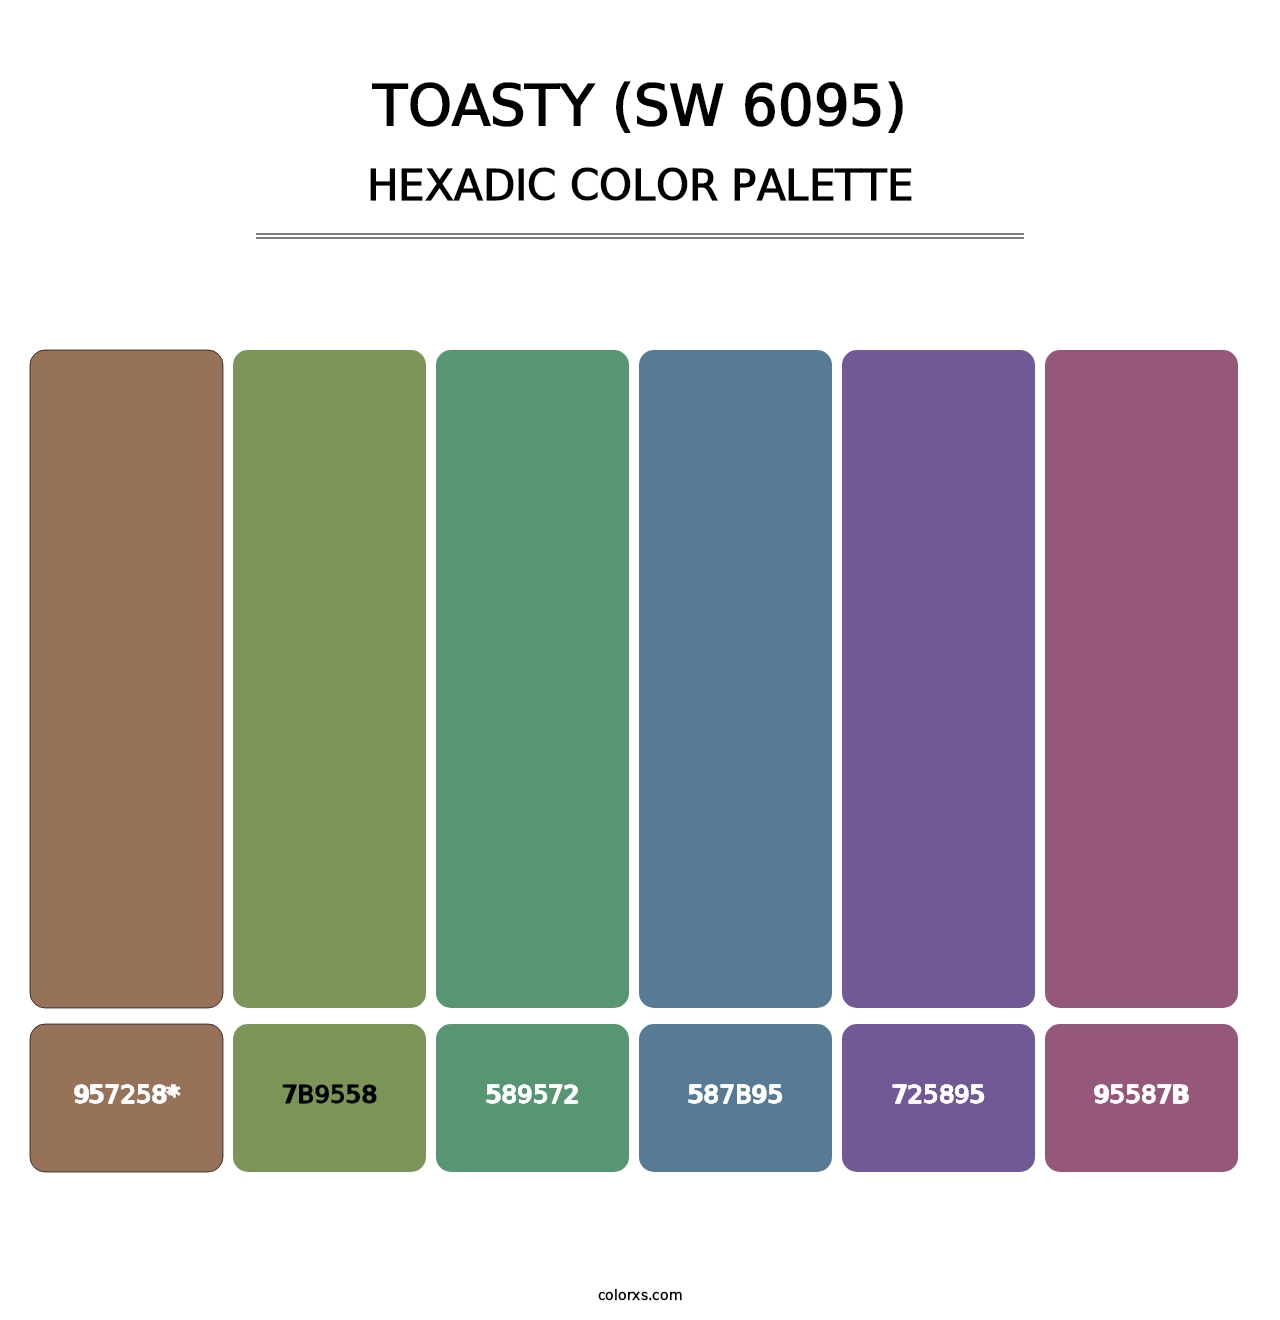 Toasty (SW 6095) - Hexadic Color Palette